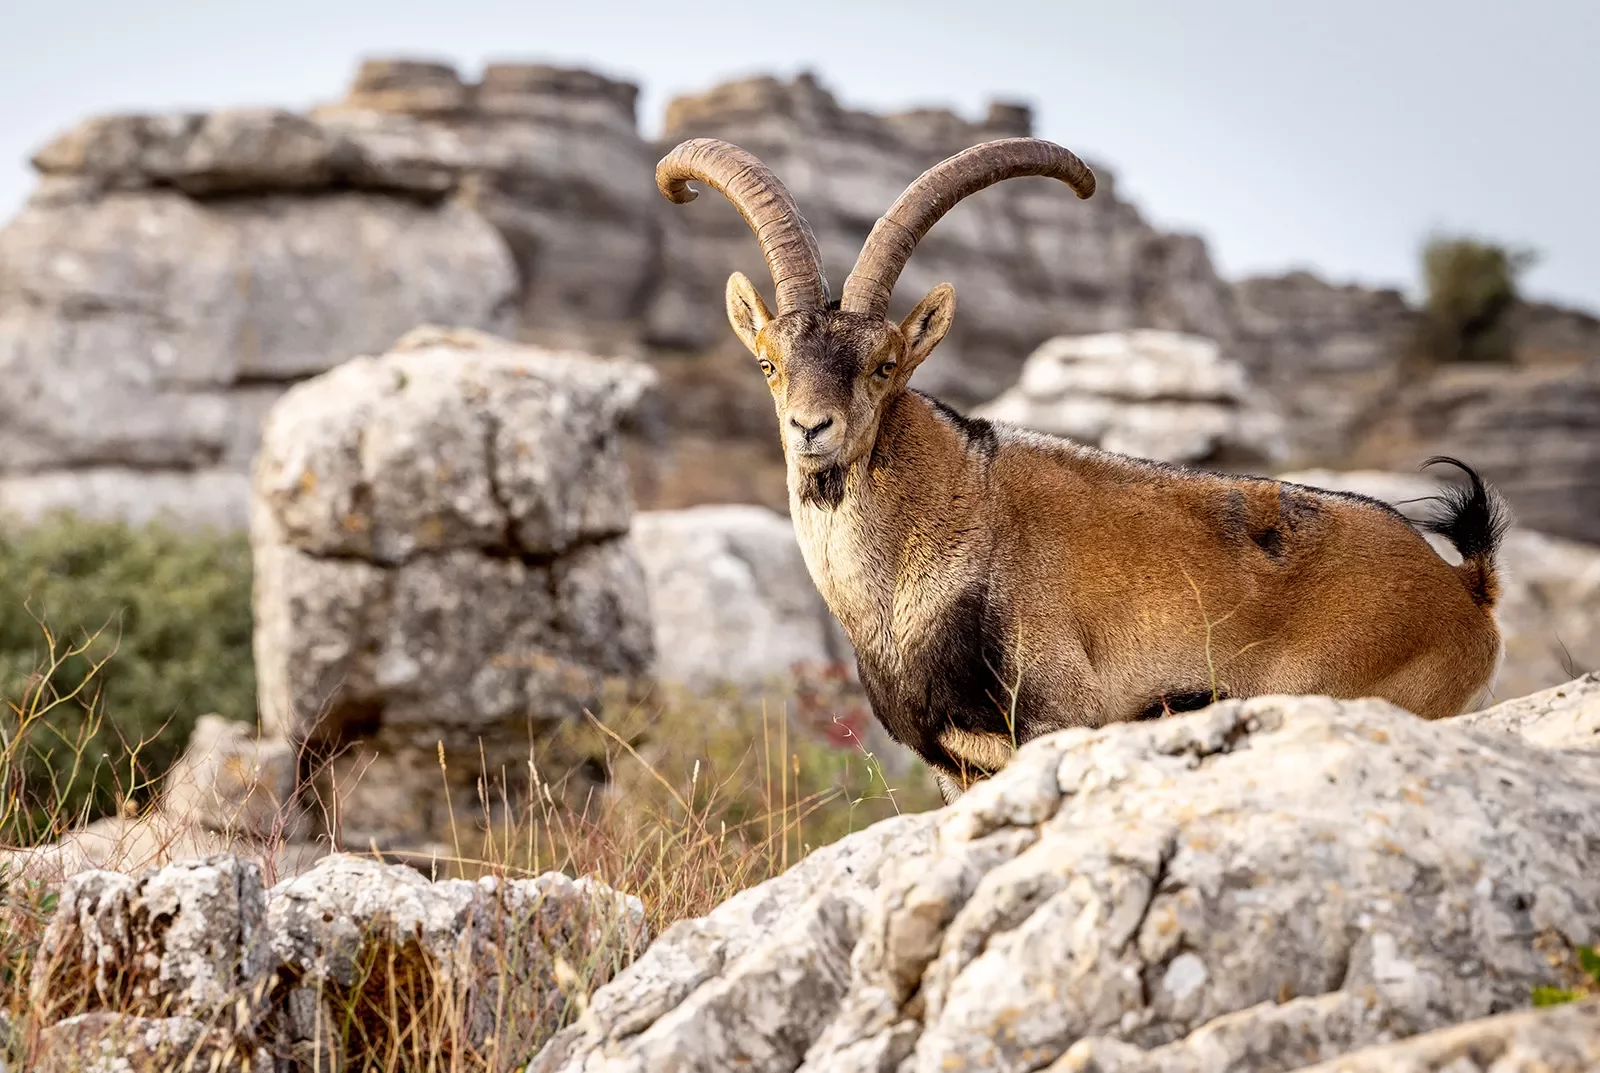 Mountain goat, Spanish Ibex in the wild.